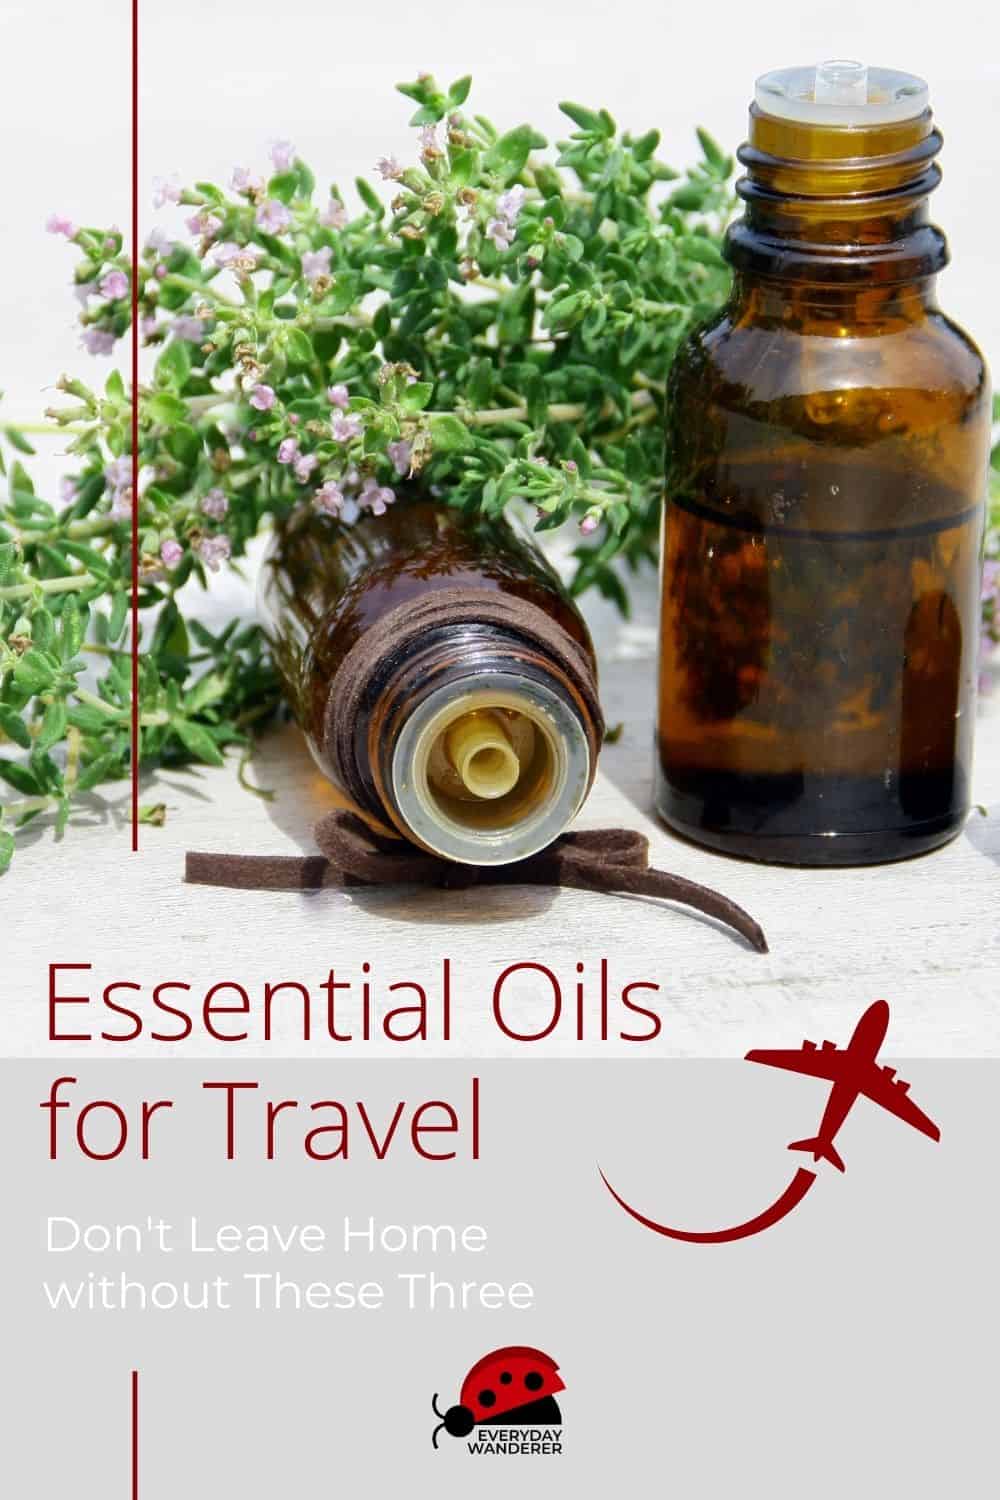 essential oils travel by air